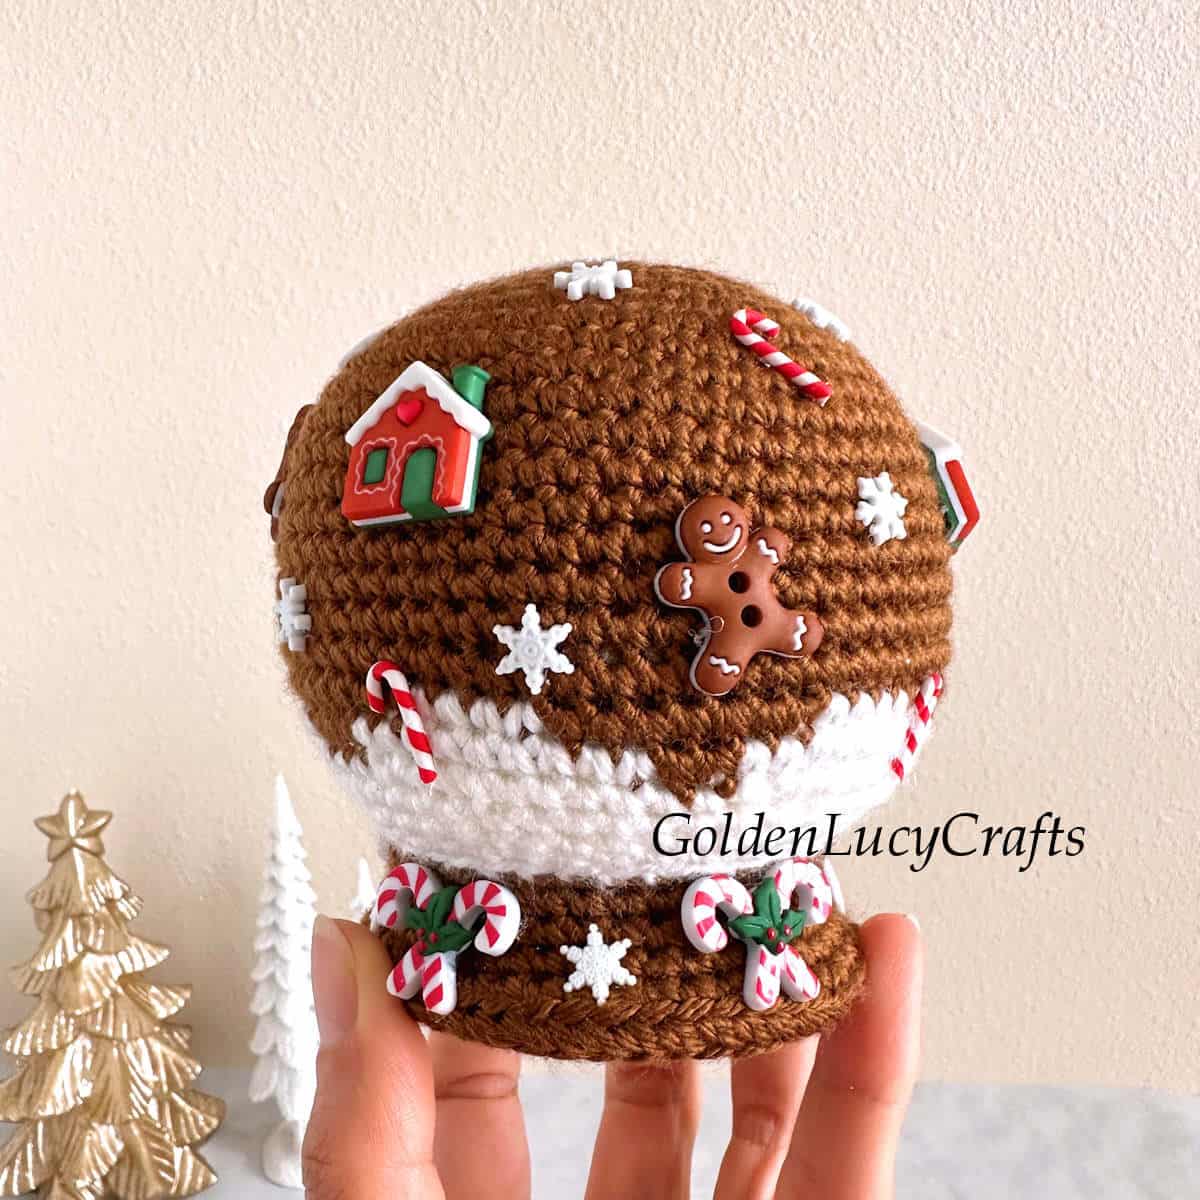 Crocheted gingerbread snow globe amigurumi held by fingertips.